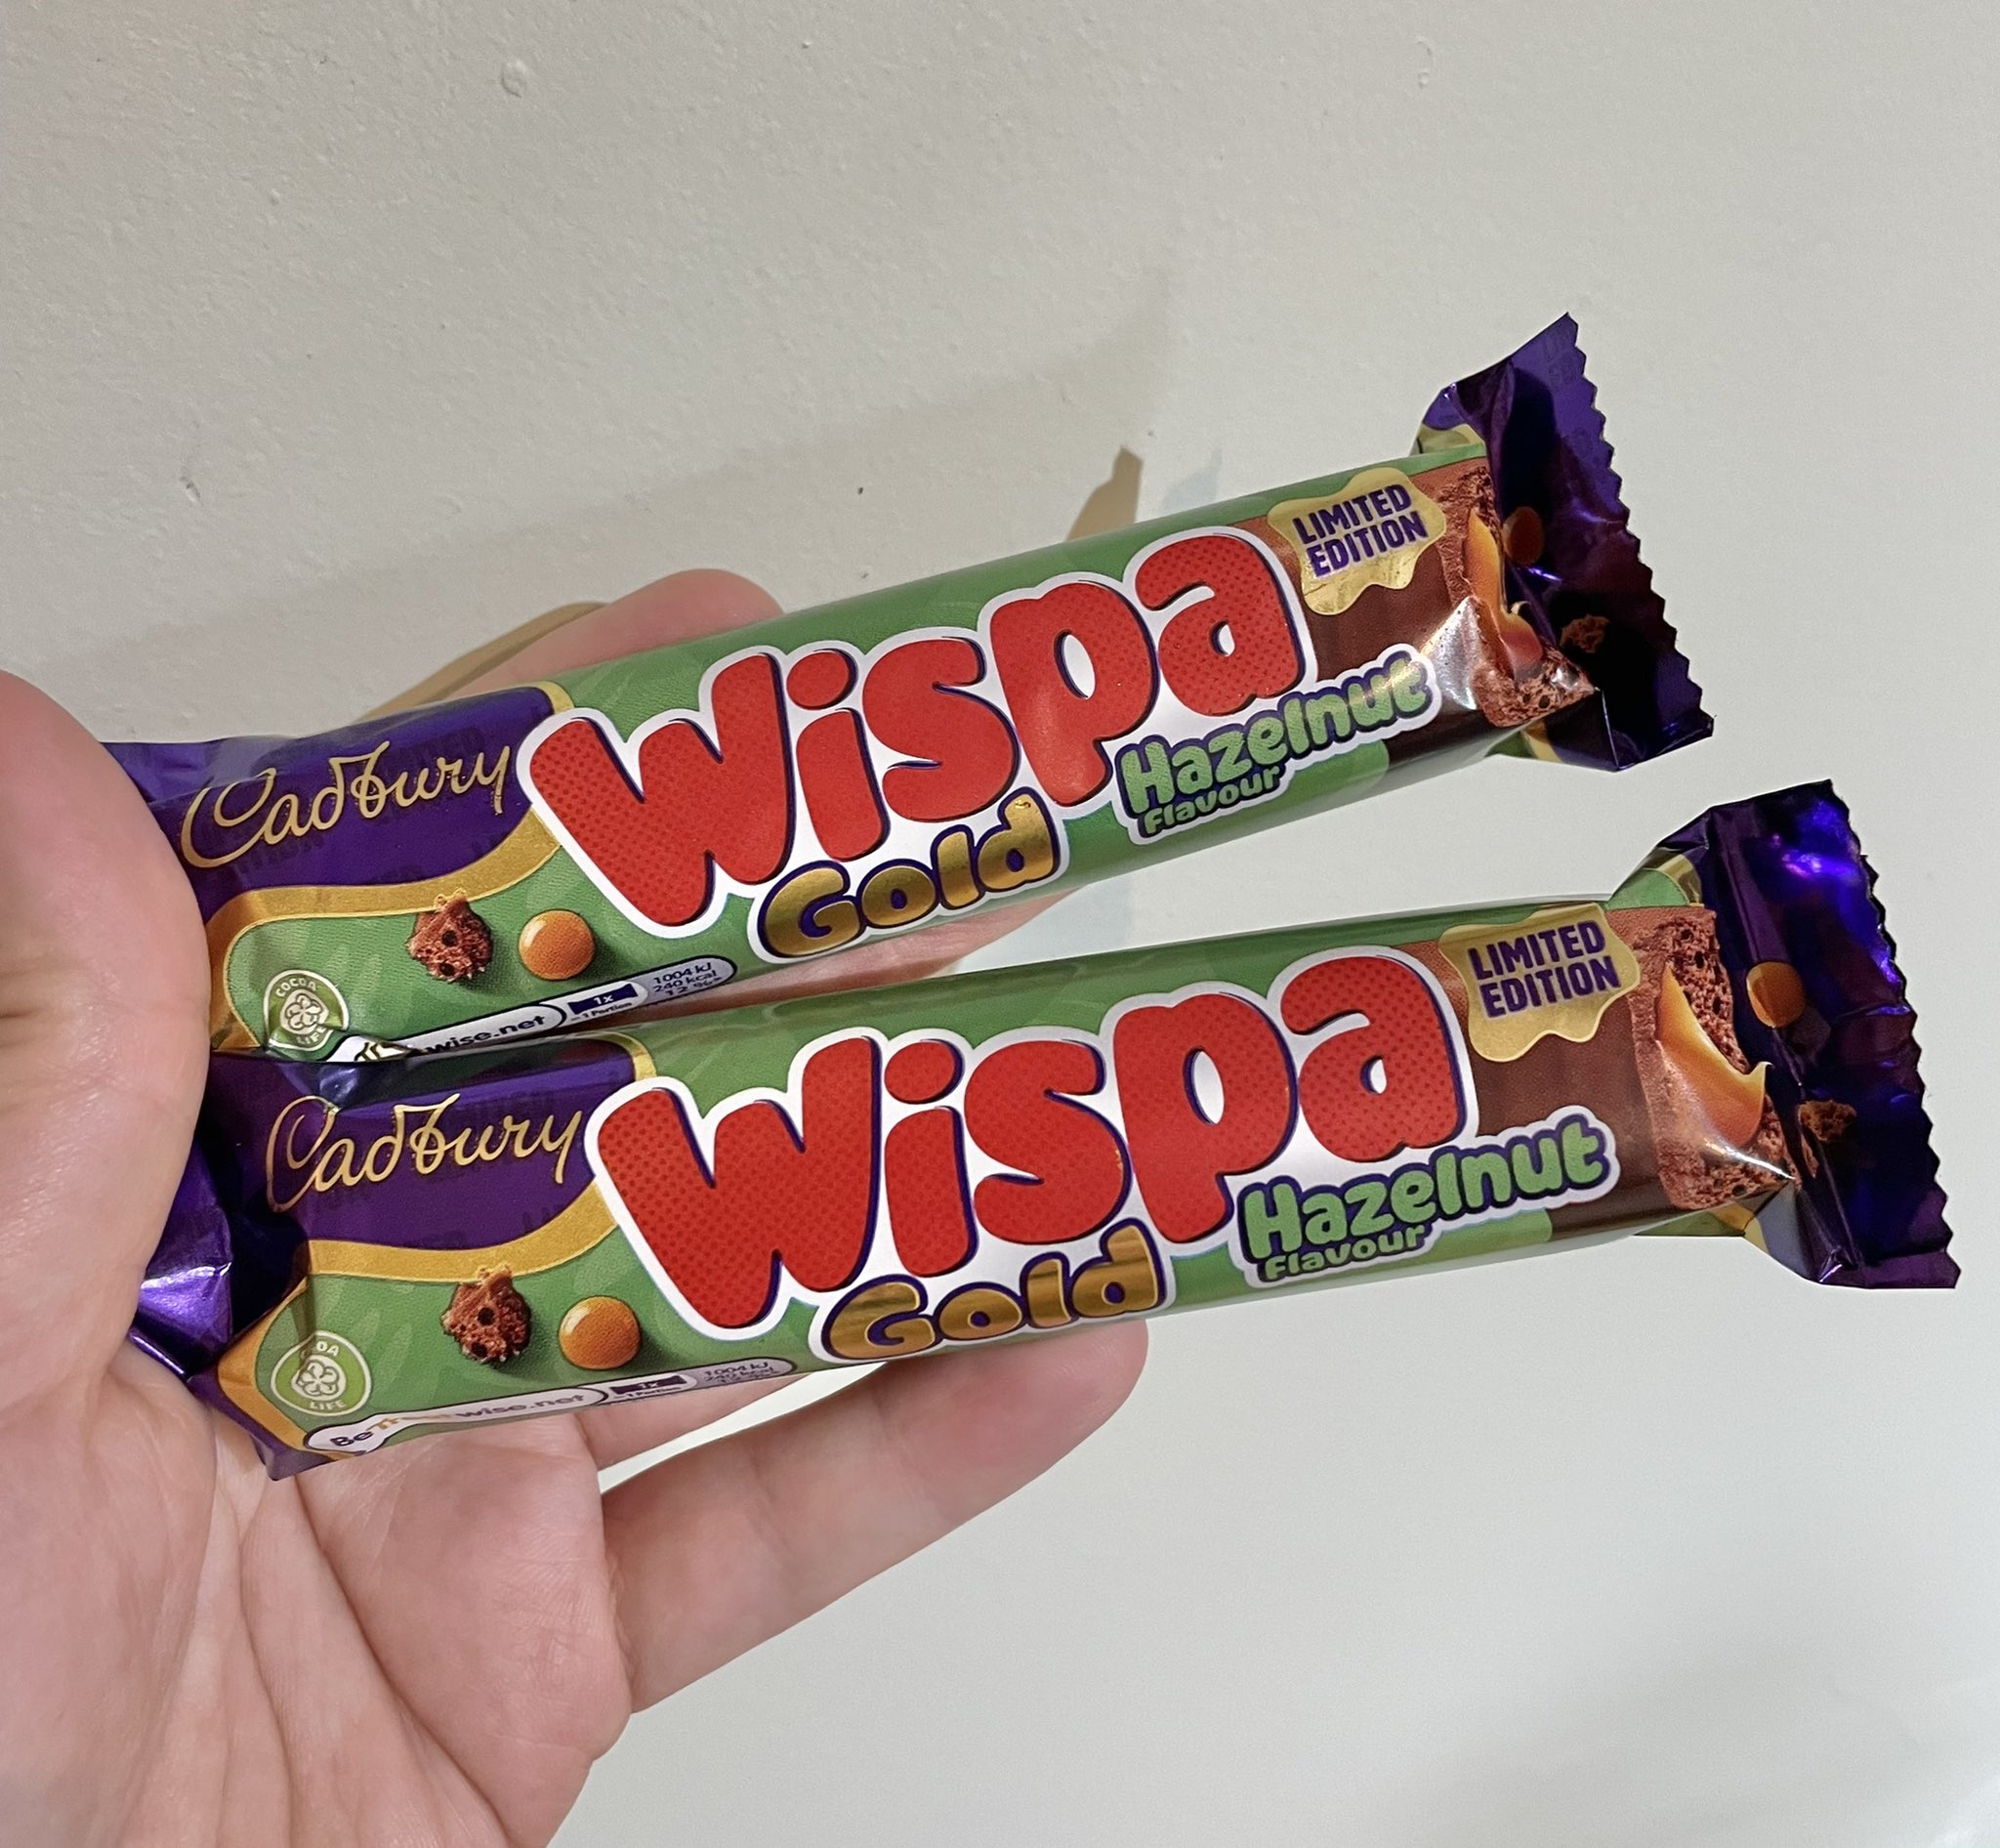 Well This Is New on X: Wispa Gold Hazelnut! 💚 At Sainsbury's @cadburyuk # cadbury #wispa #wispagold #wispagoldhazelnut #caramel #chocolate #hazelnut  #wellthisisnew  / X